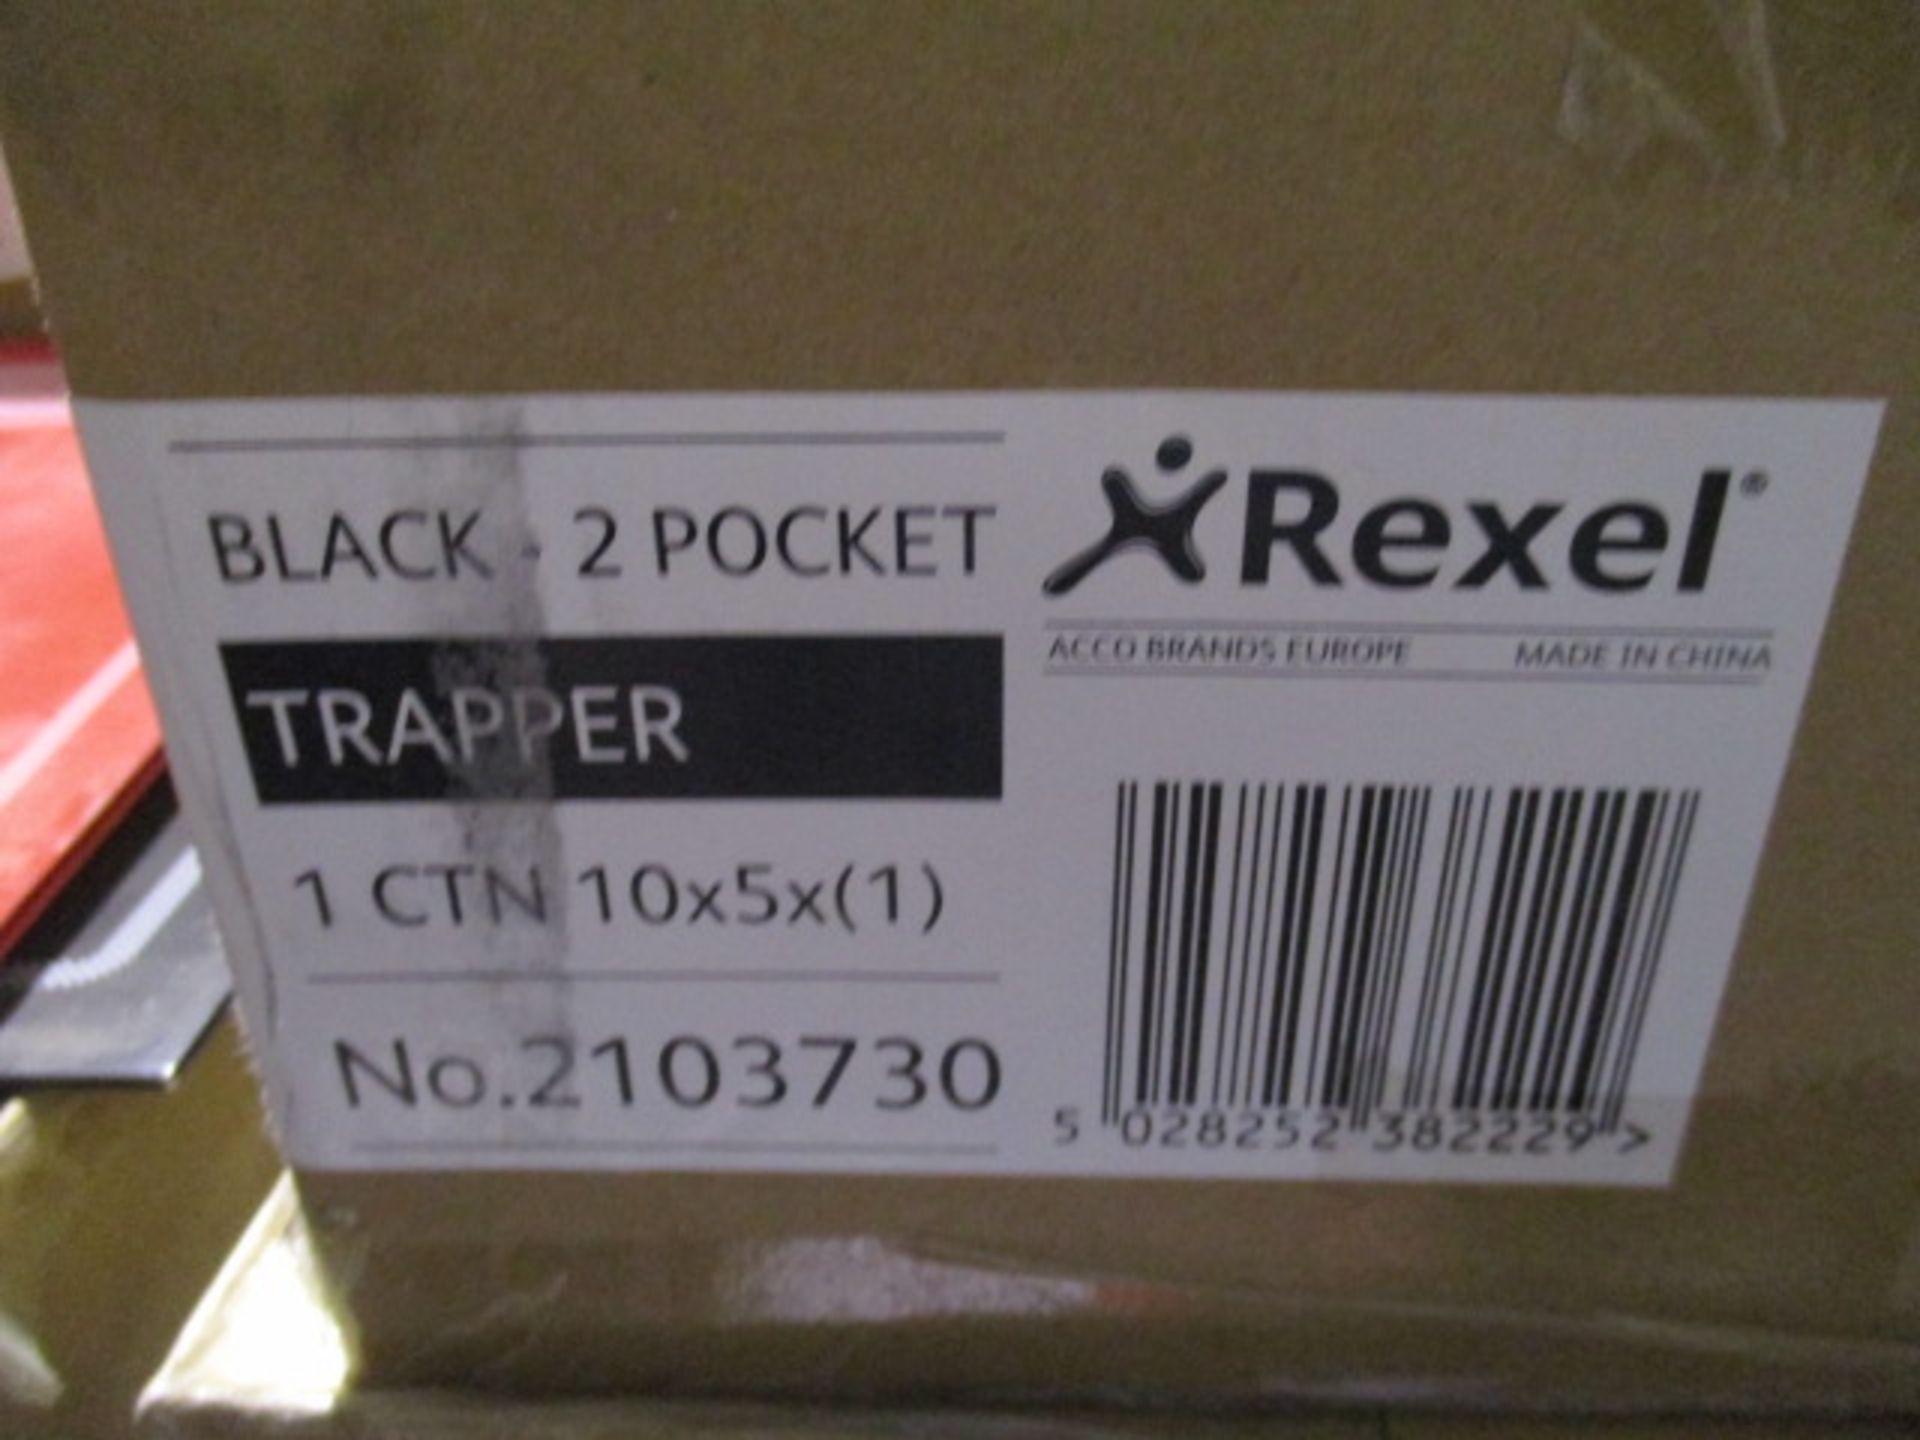 Appx 500pcs Rexel trapper system various colours - Image 3 of 6